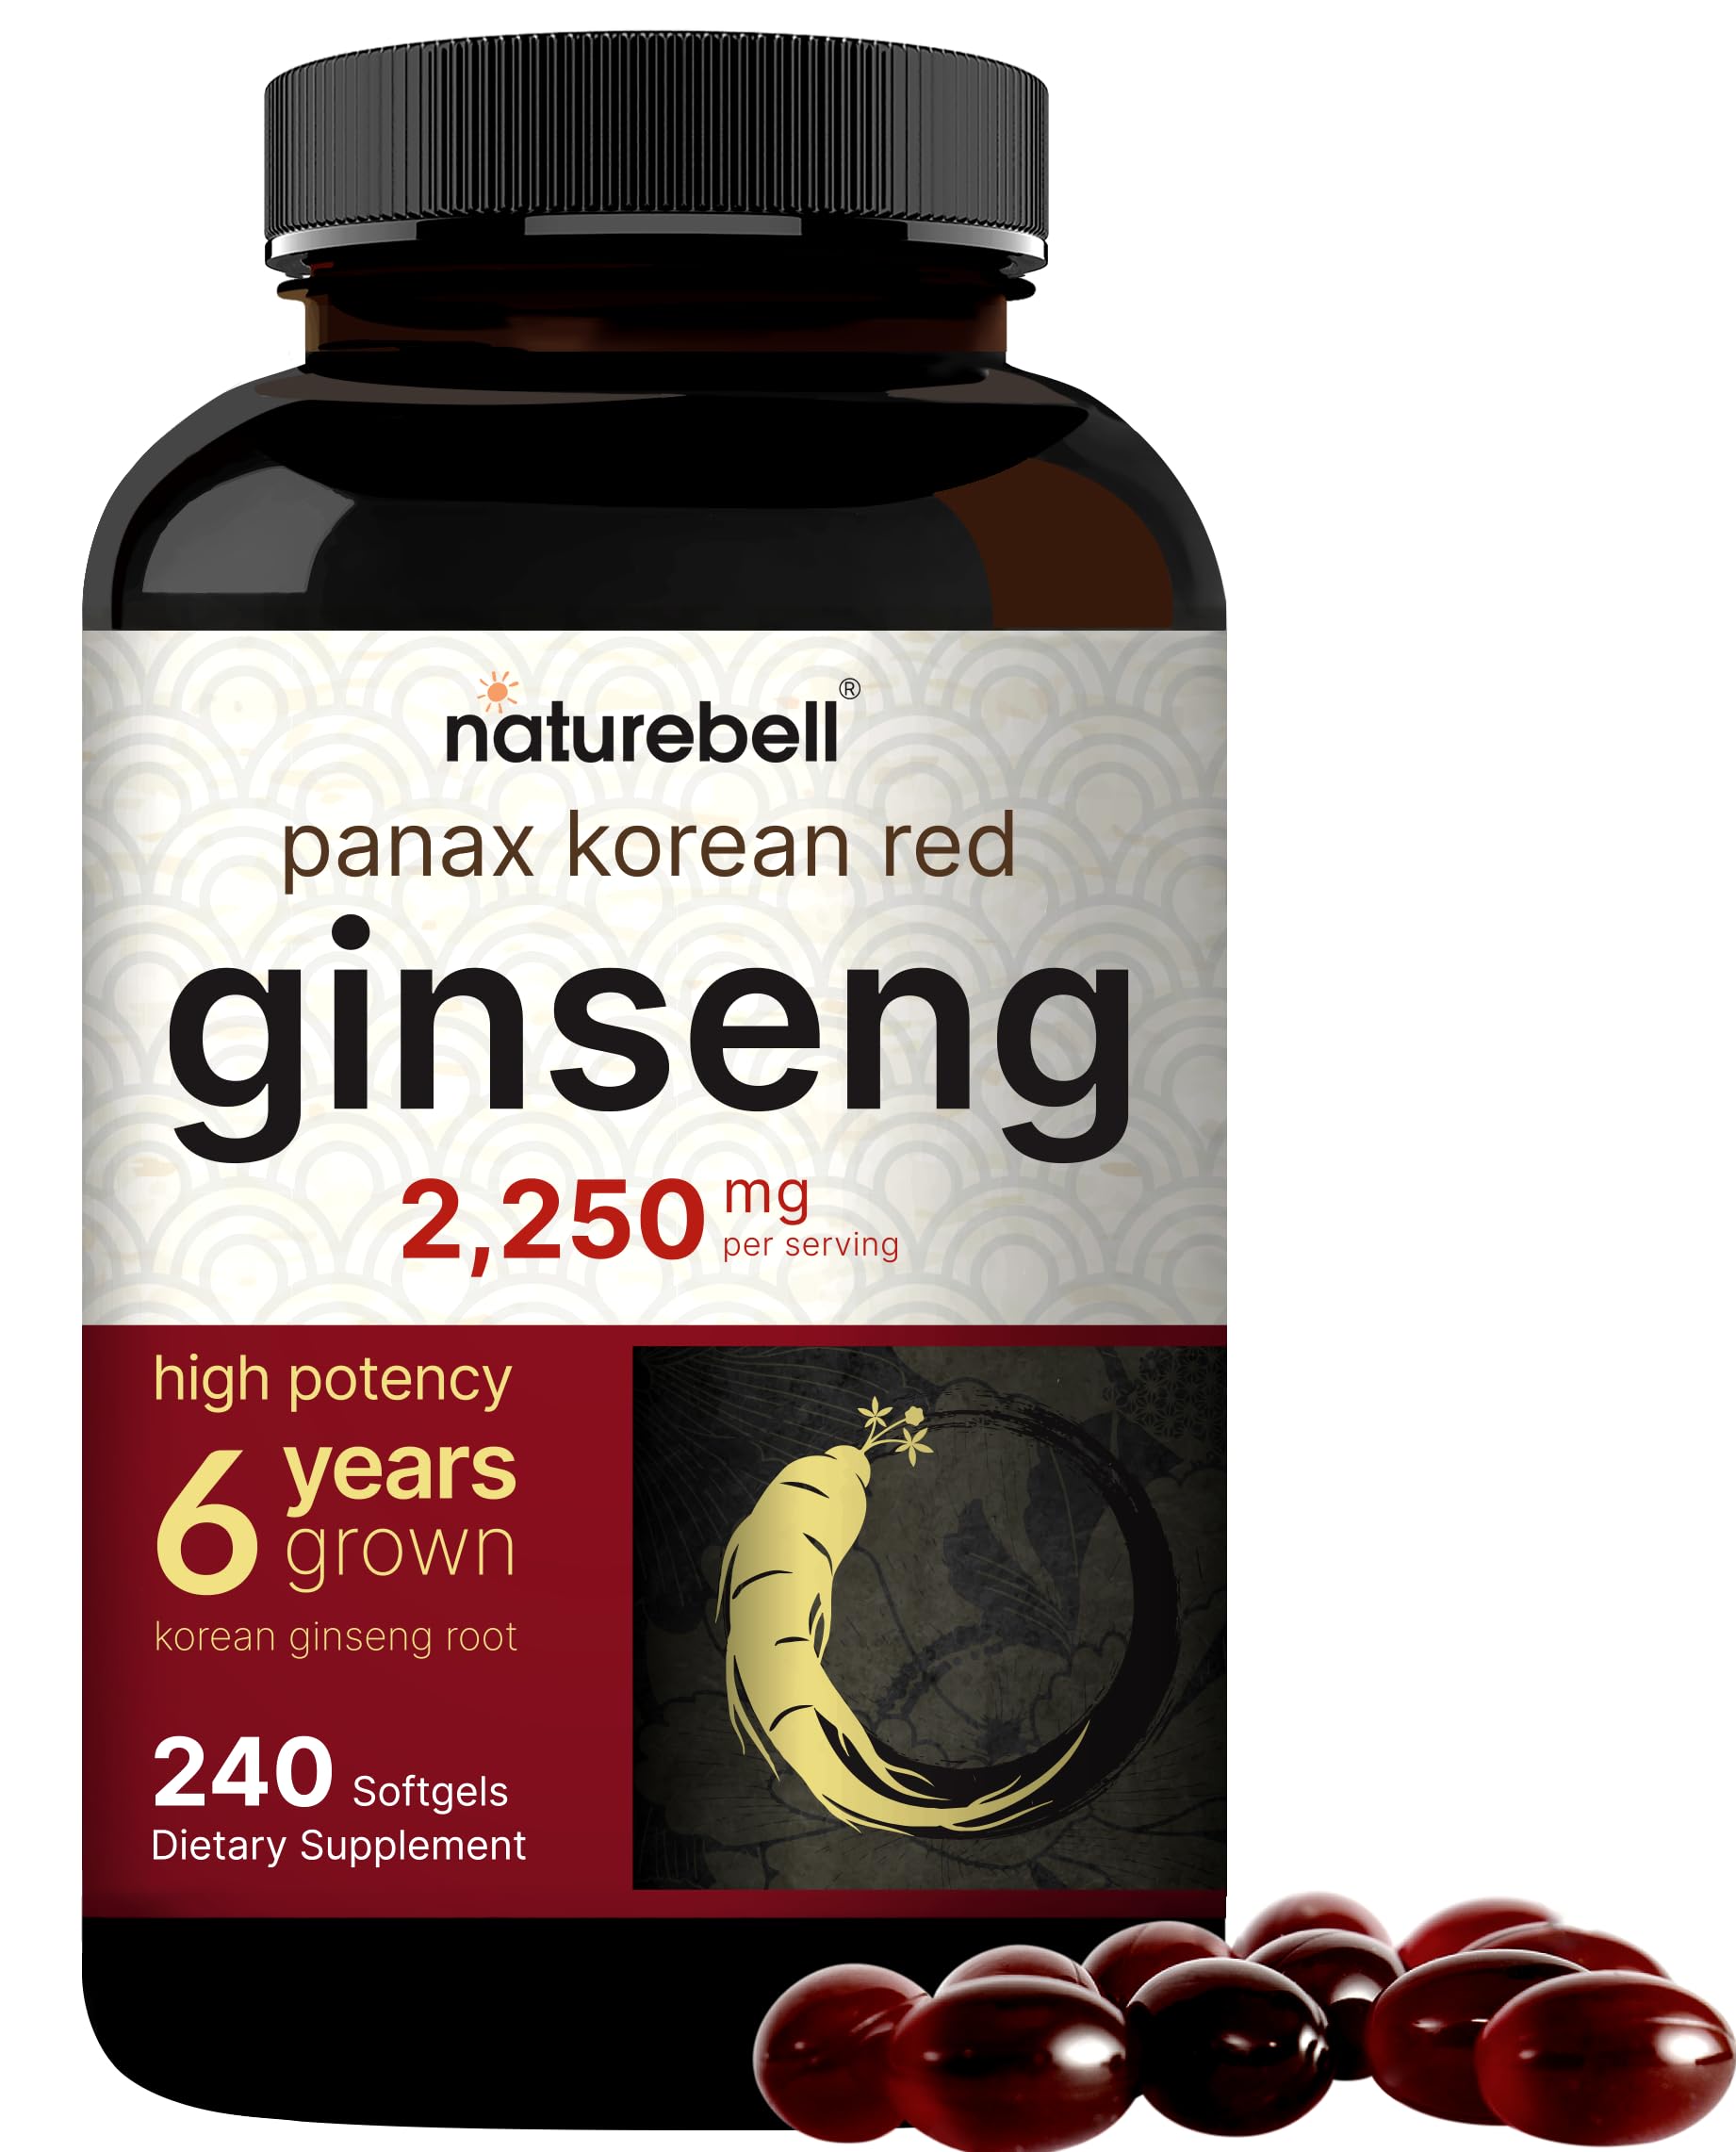 Ginseng for immune system